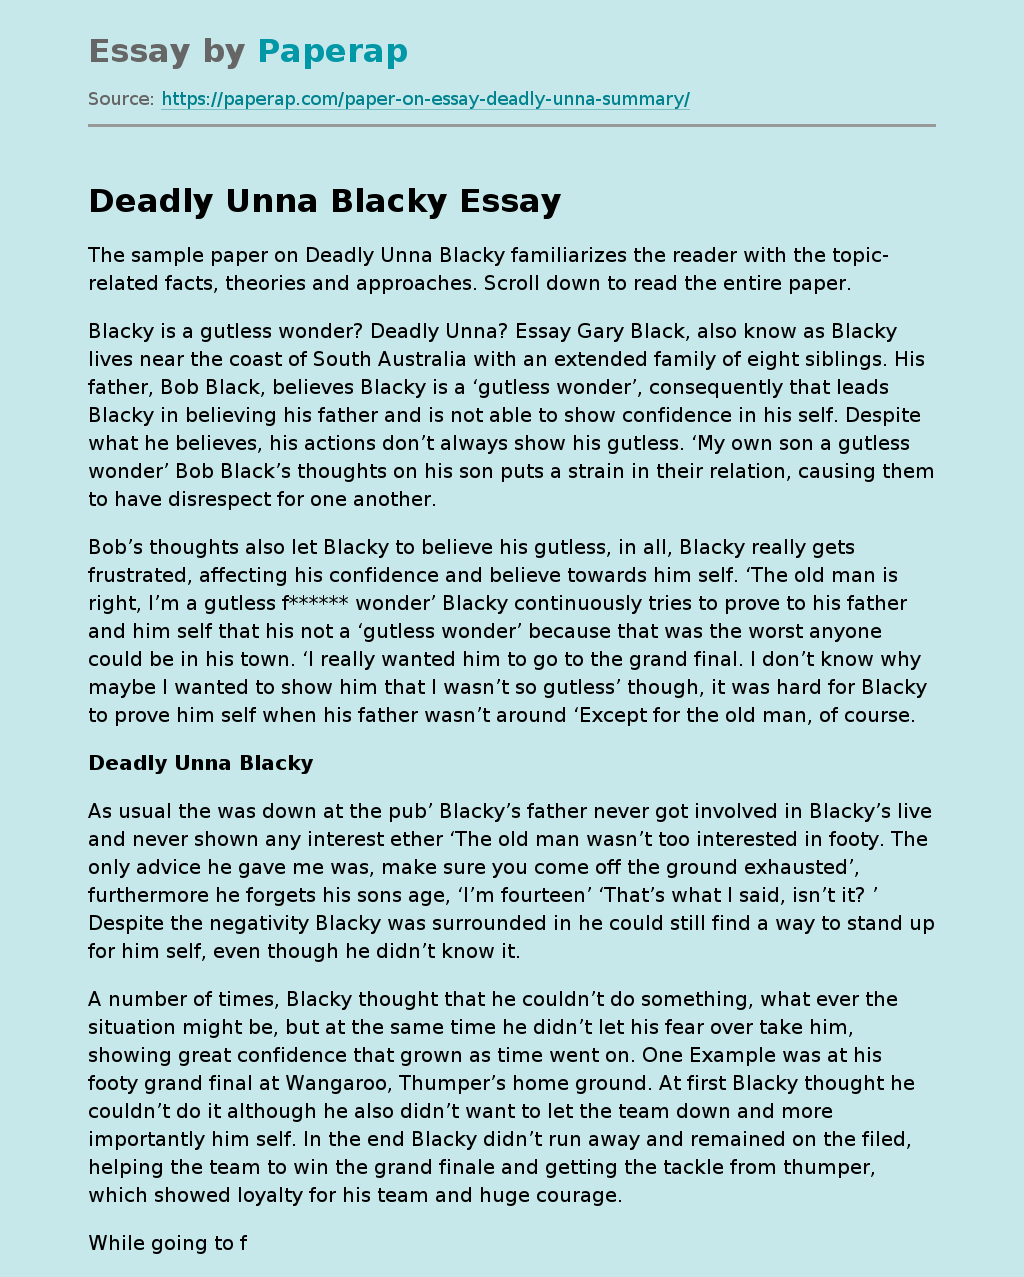 Deadly Unna Blacky